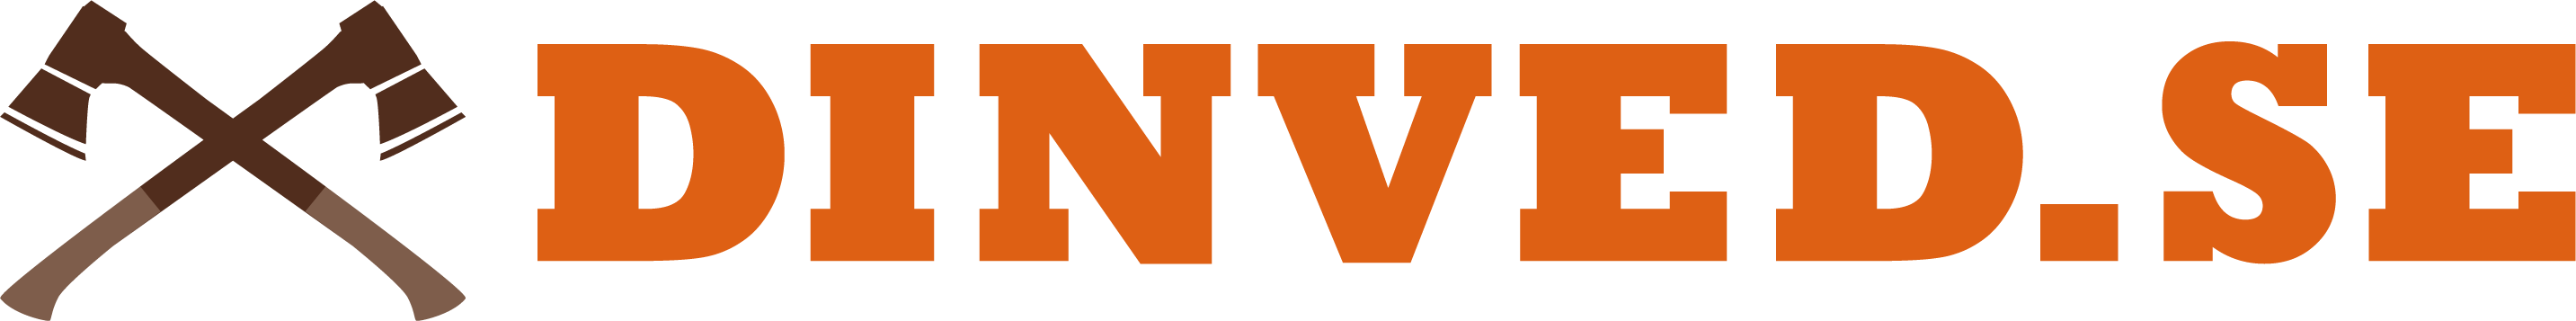 Din Ved logo.